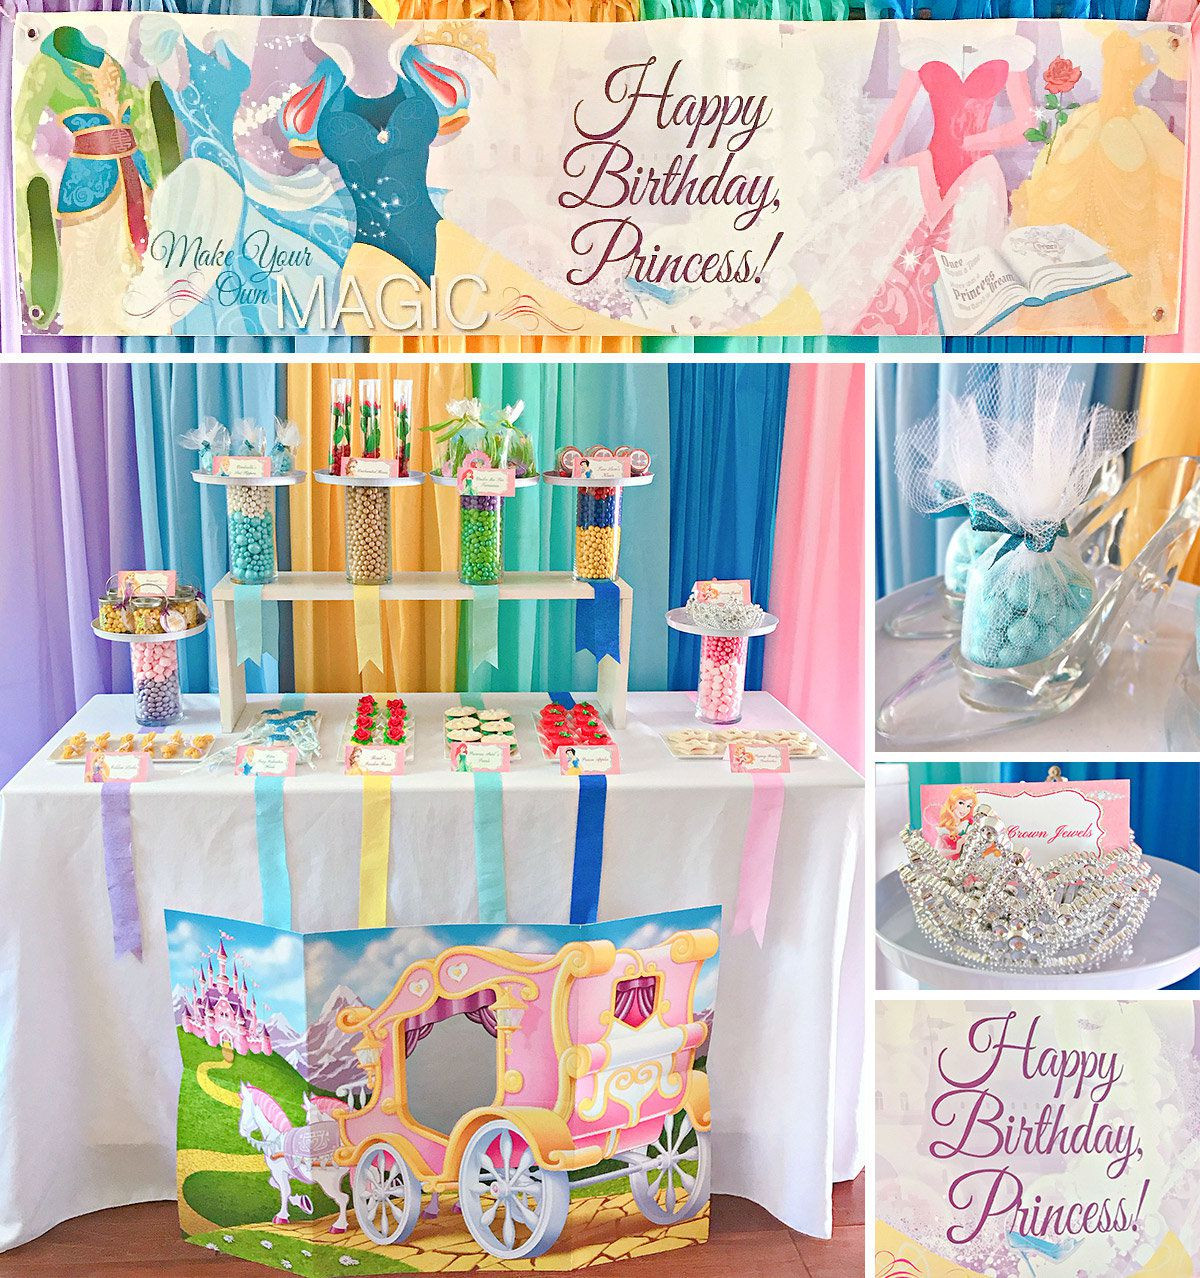 Best ideas about Disney Princess Birthday Party
. Save or Pin Disney Princess Party Ideas Now.